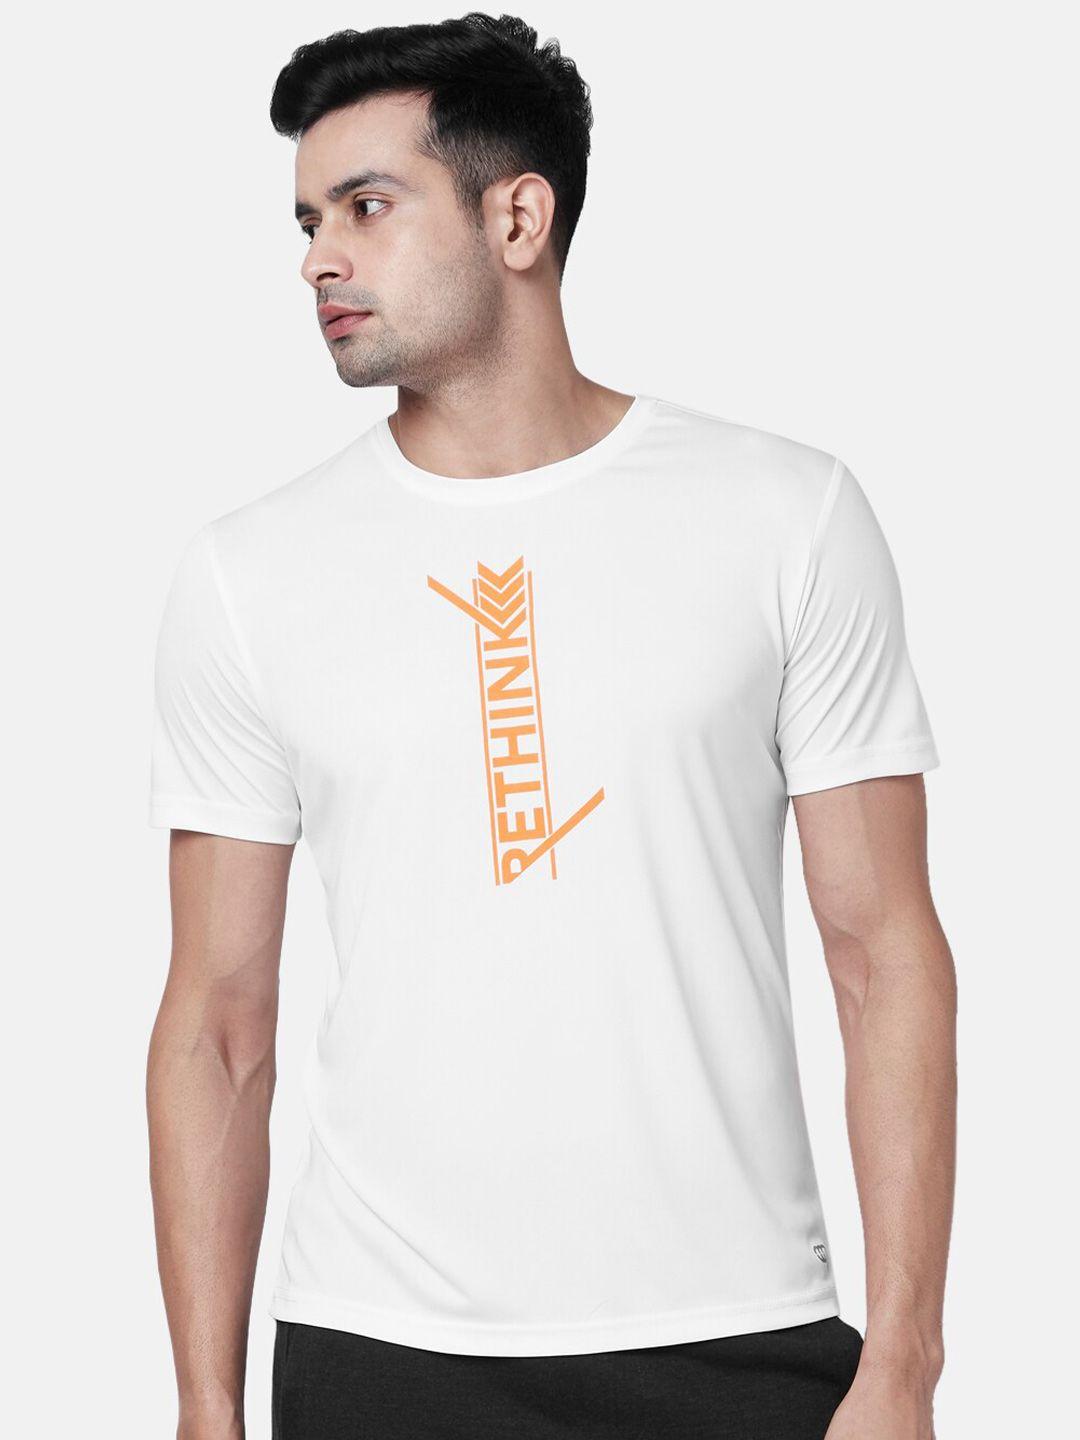 ajile by pantaloons men white typography printed slim fit t-shirt